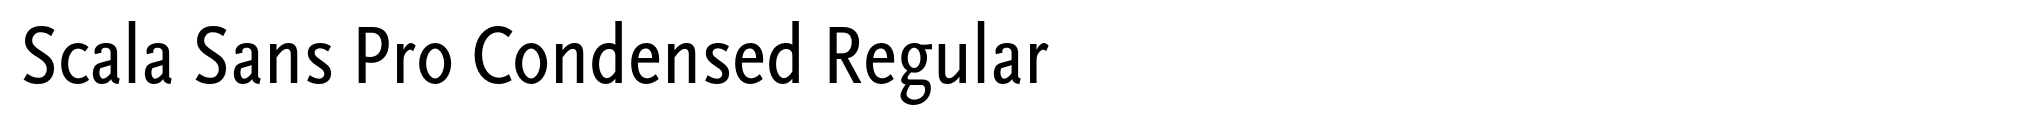 Scala Sans Pro Condensed Regular image